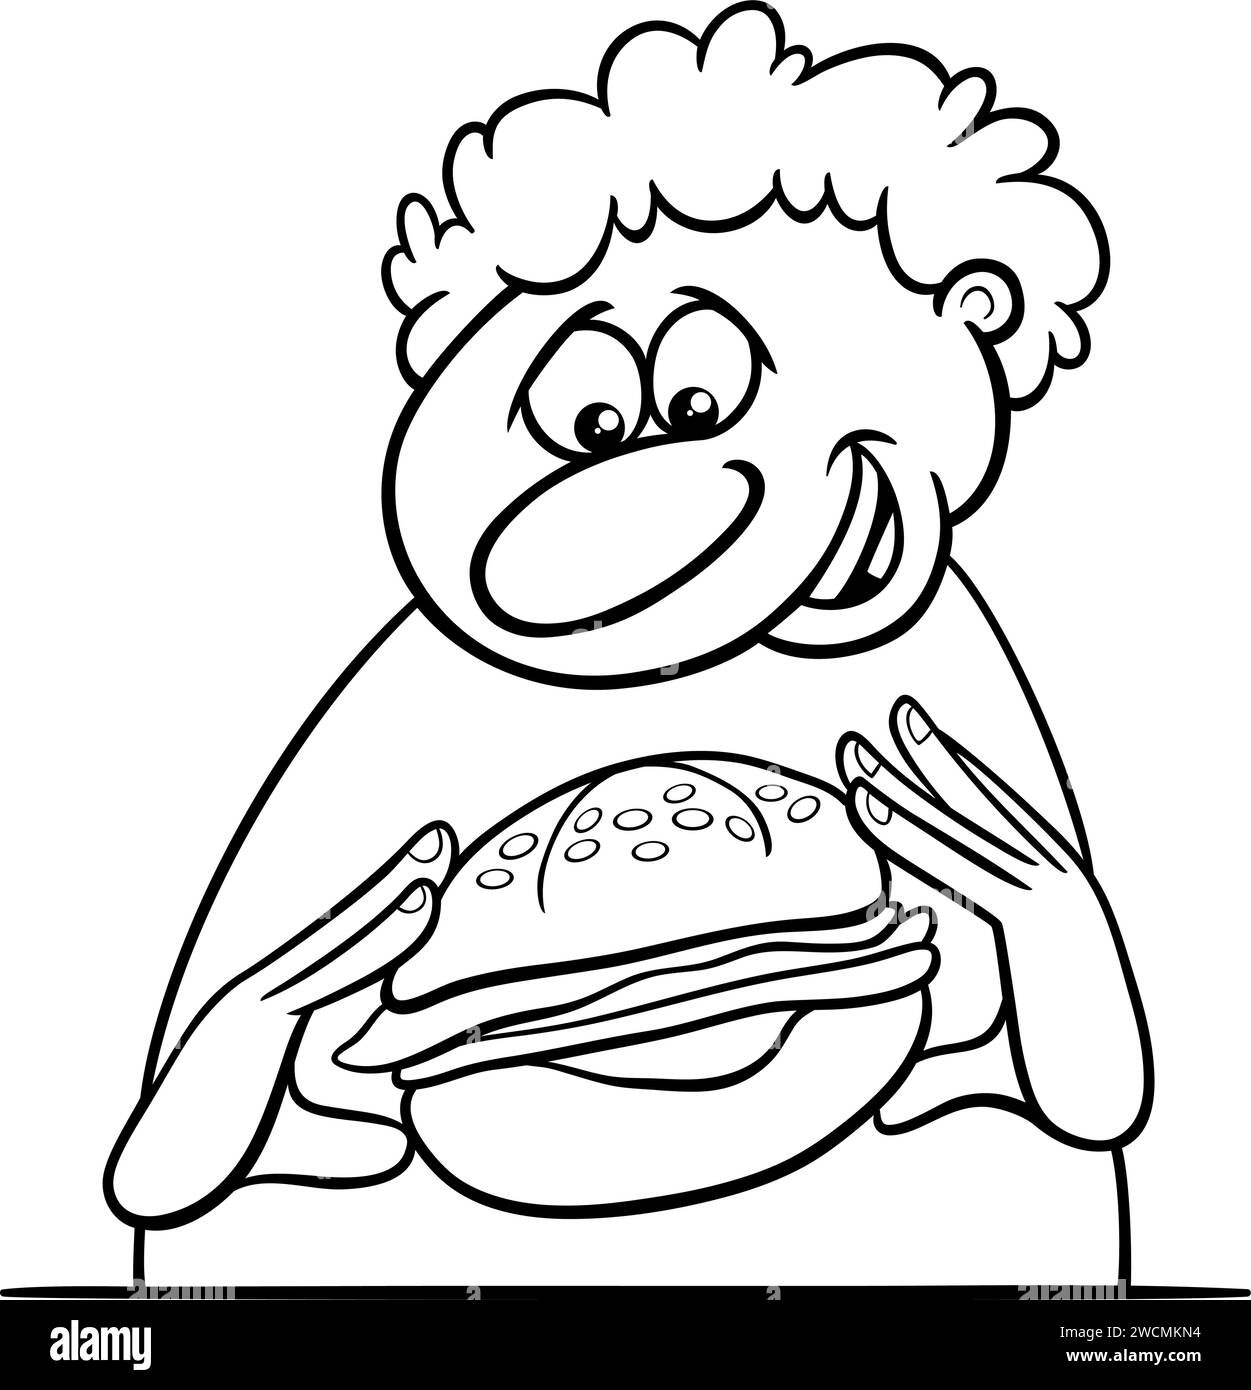 Cartoon illustration of a man eating a cheeseburger coloring page Stock Vector